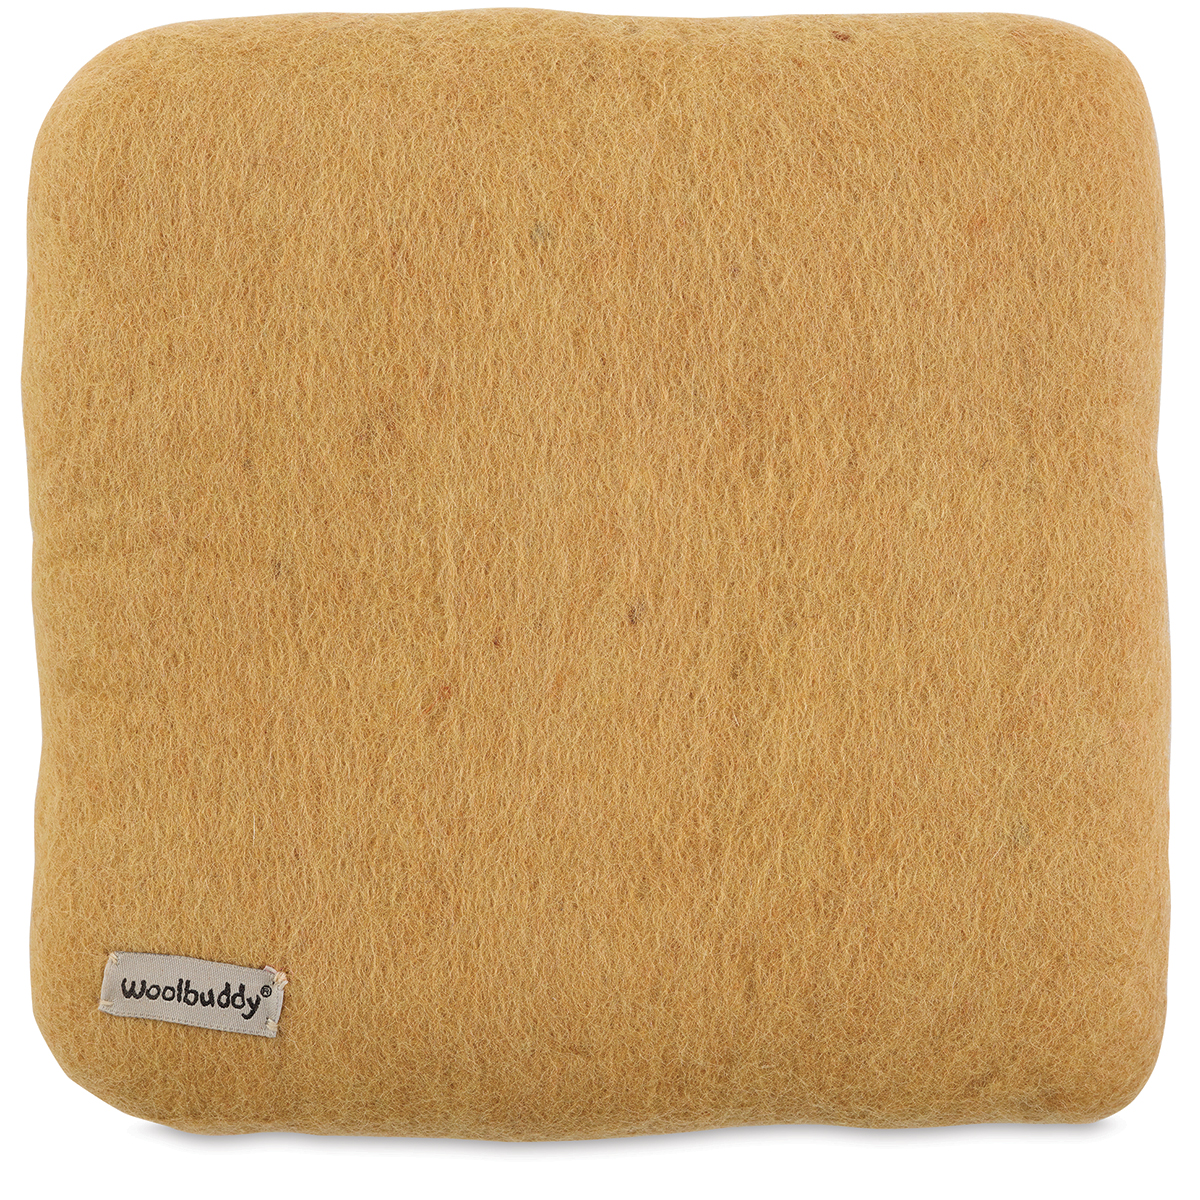 Woolbuddy Needle Felting 100% Woolen Mat (Yellow) Size XL